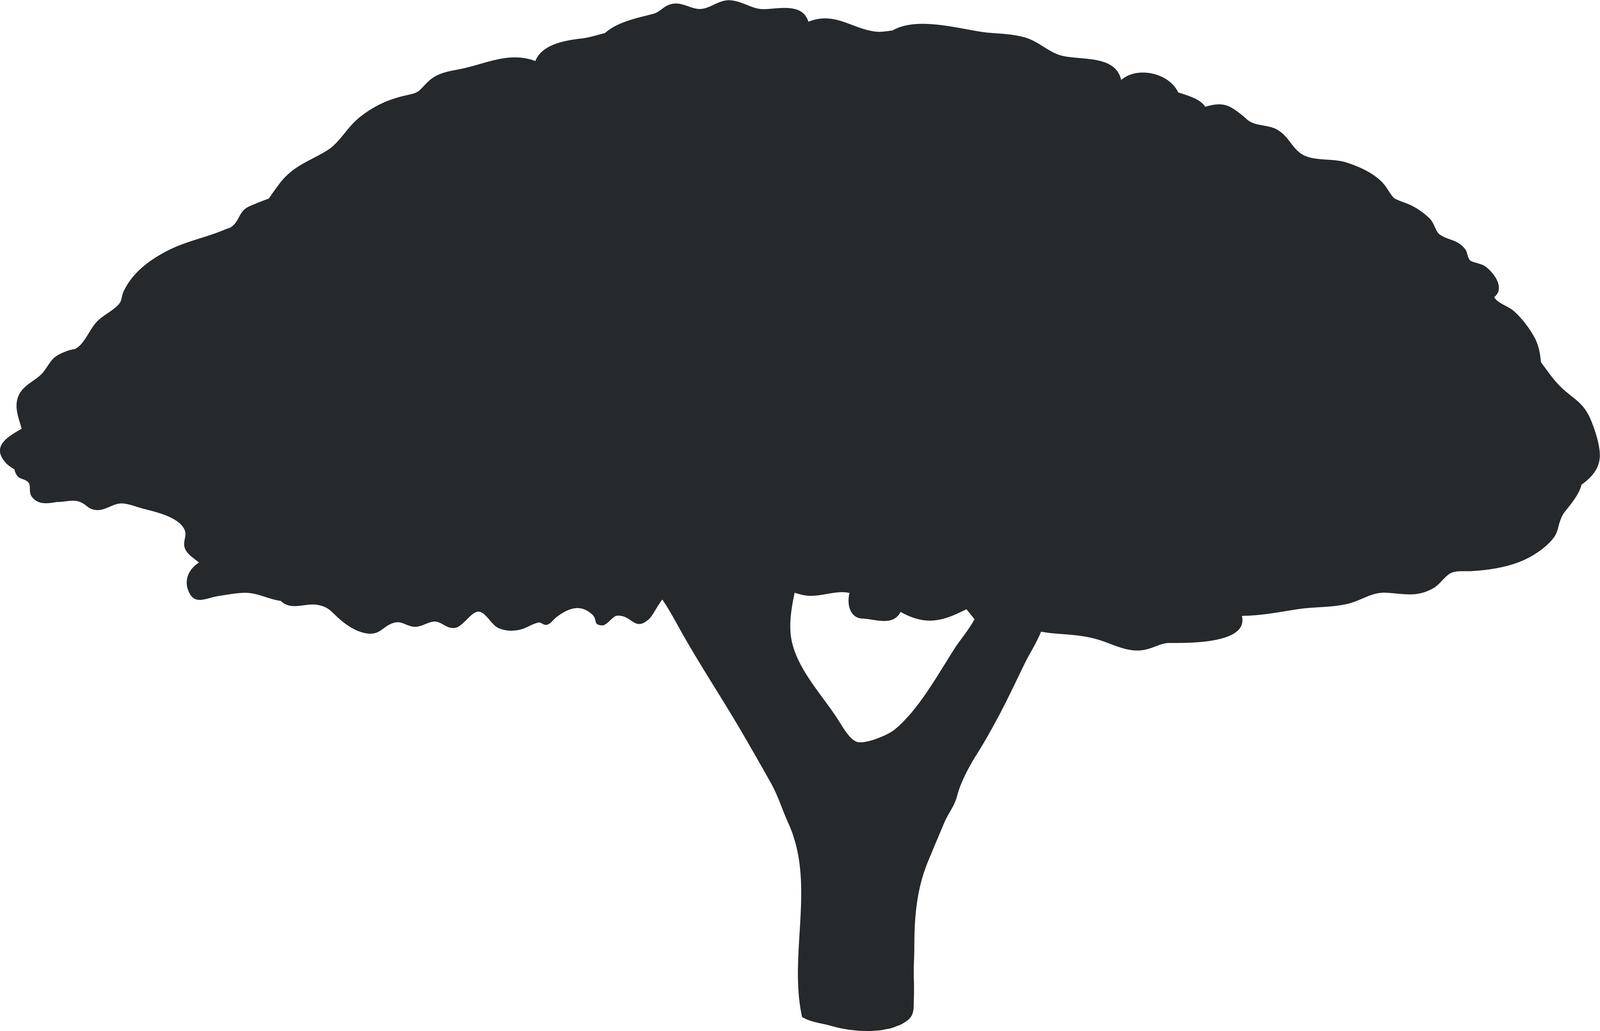 Baobab silhouette. Savanna nature symbol. Black tree isolated on white background